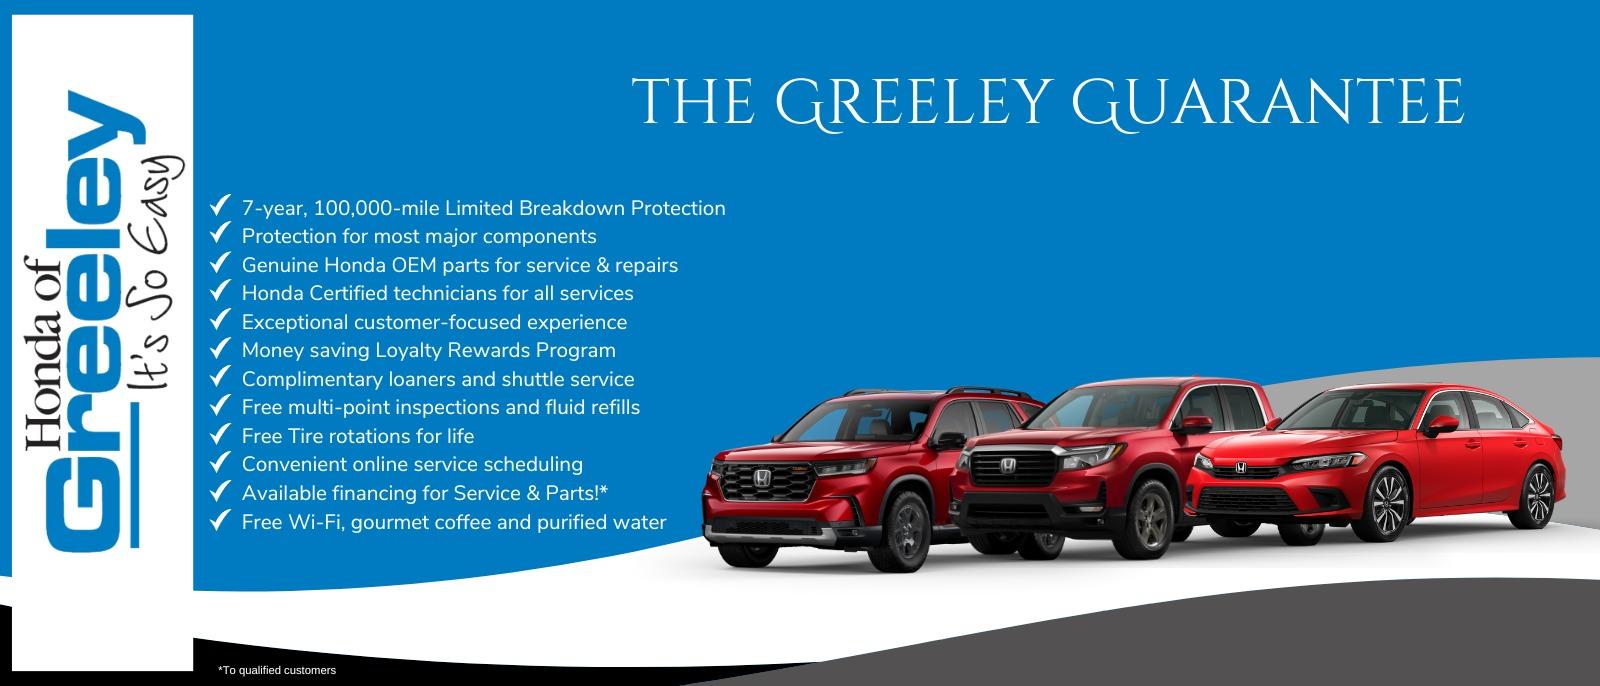 Greeley guarantee